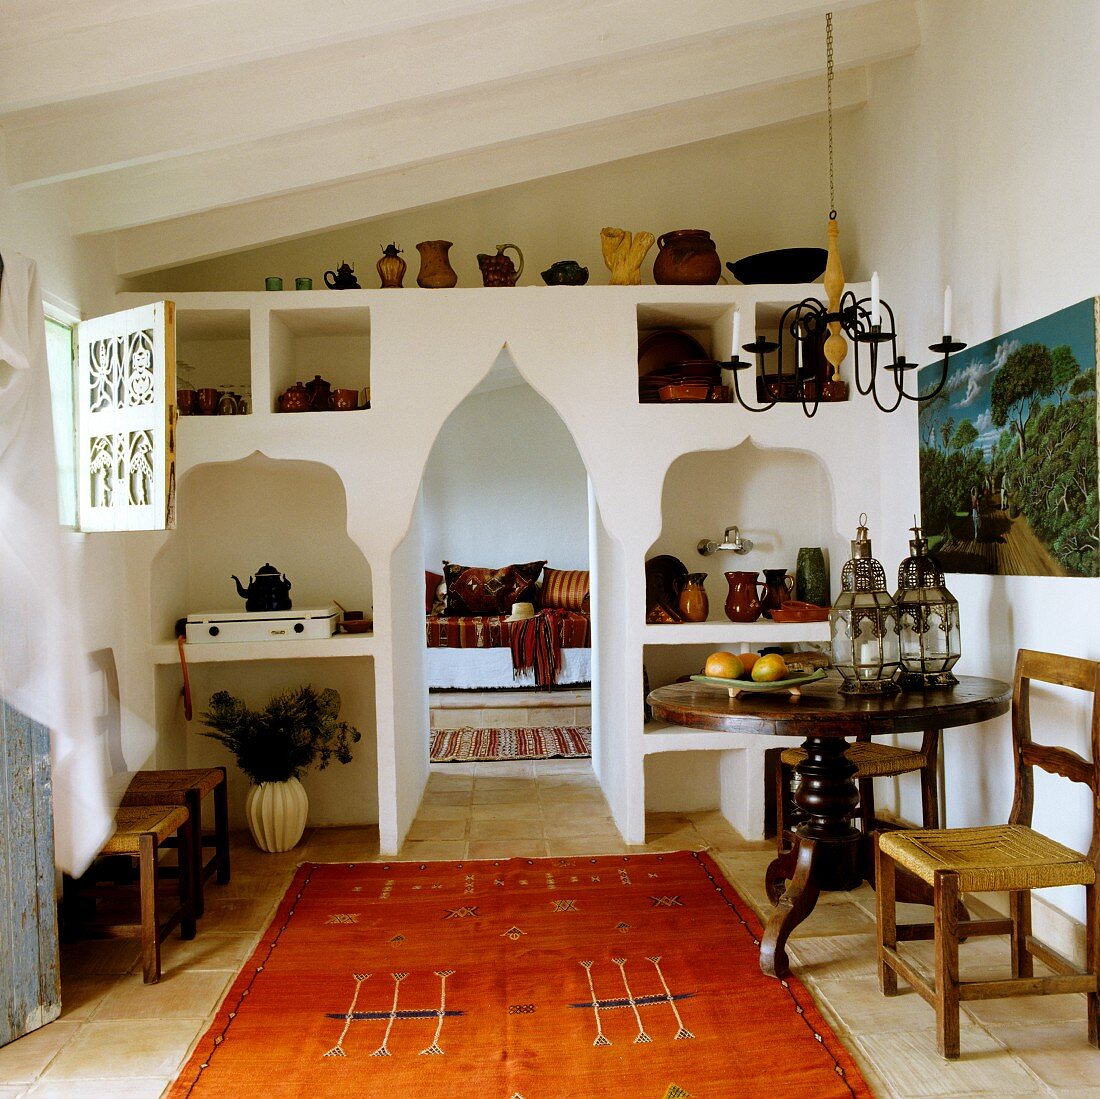 Ethnic rug in Mediterranean interior with pointed arched doorway